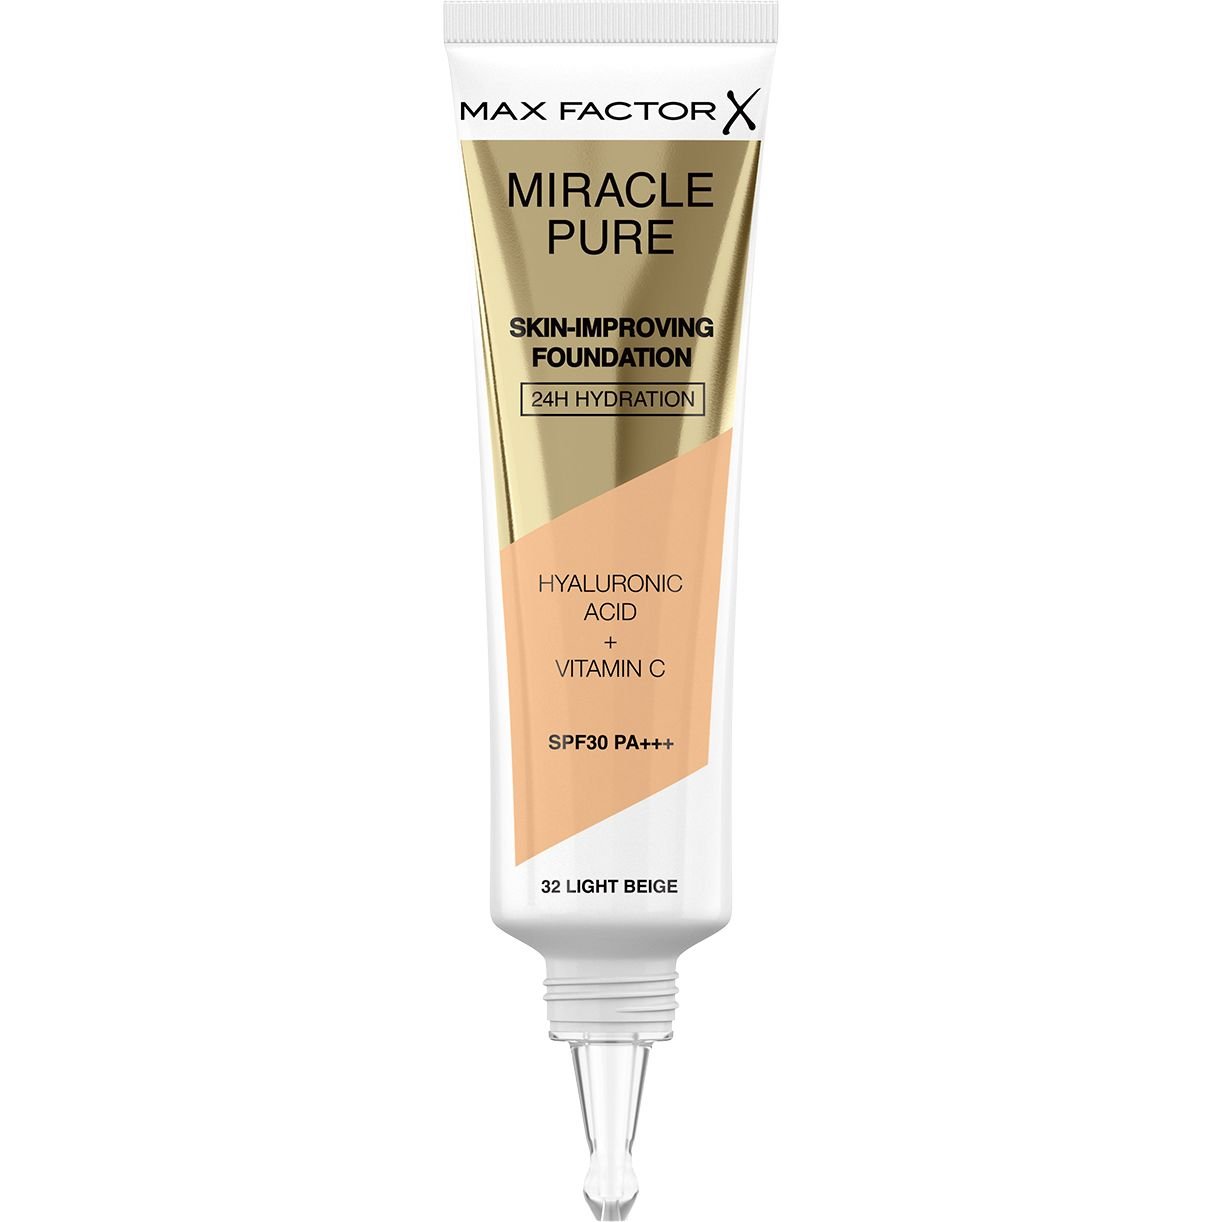 Тональная основа Max Factor Miracle Pure Skin-Improving Foundation SPF30 тон 032 (Light Beige) 30 мл - фото 2